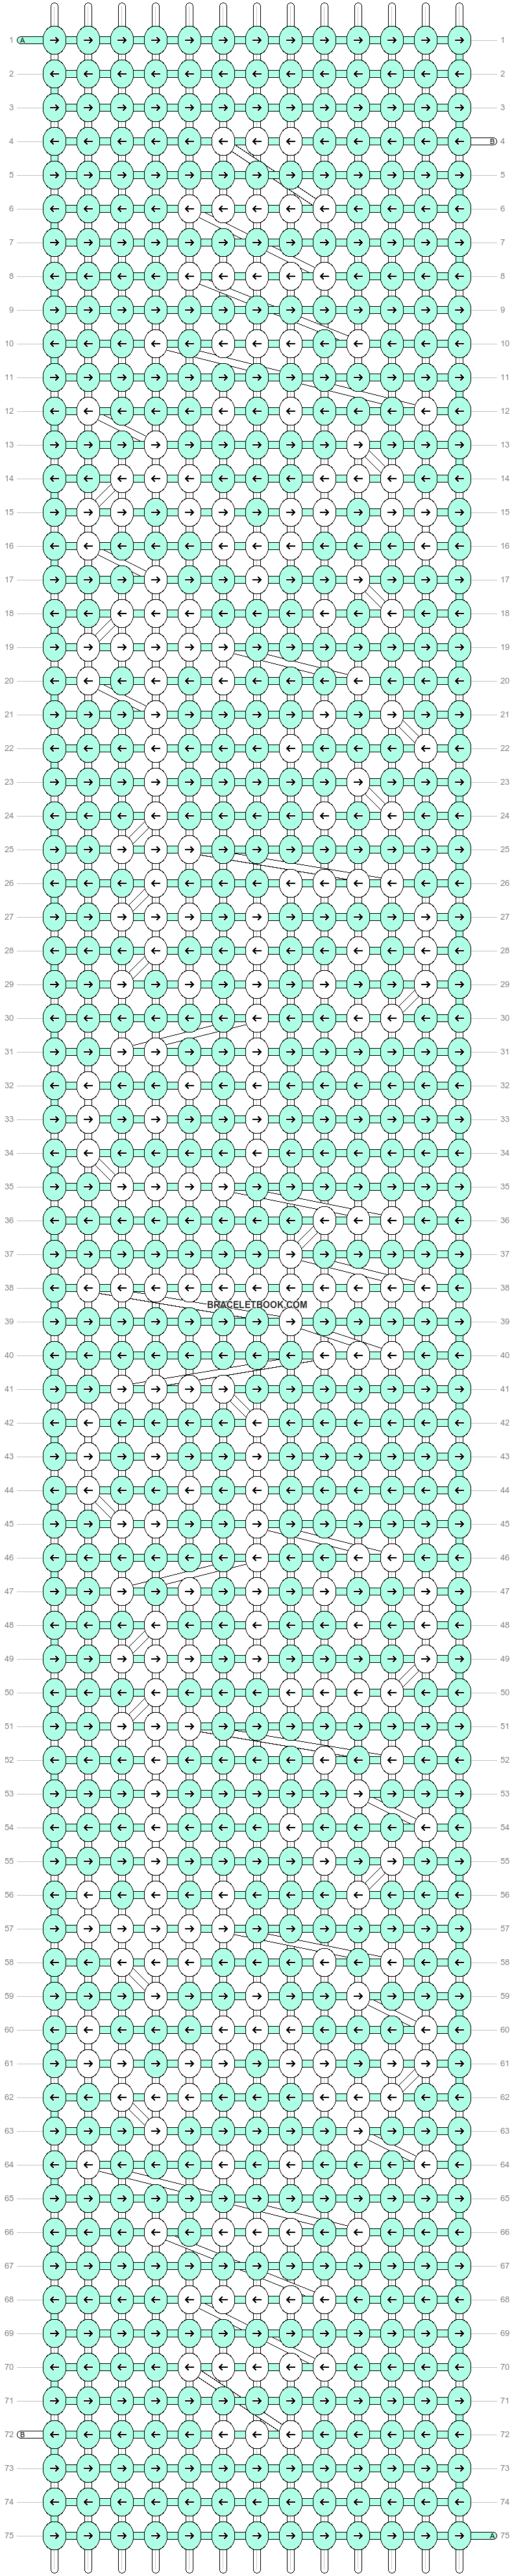 Alpha pattern #57355 variation #137459 pattern